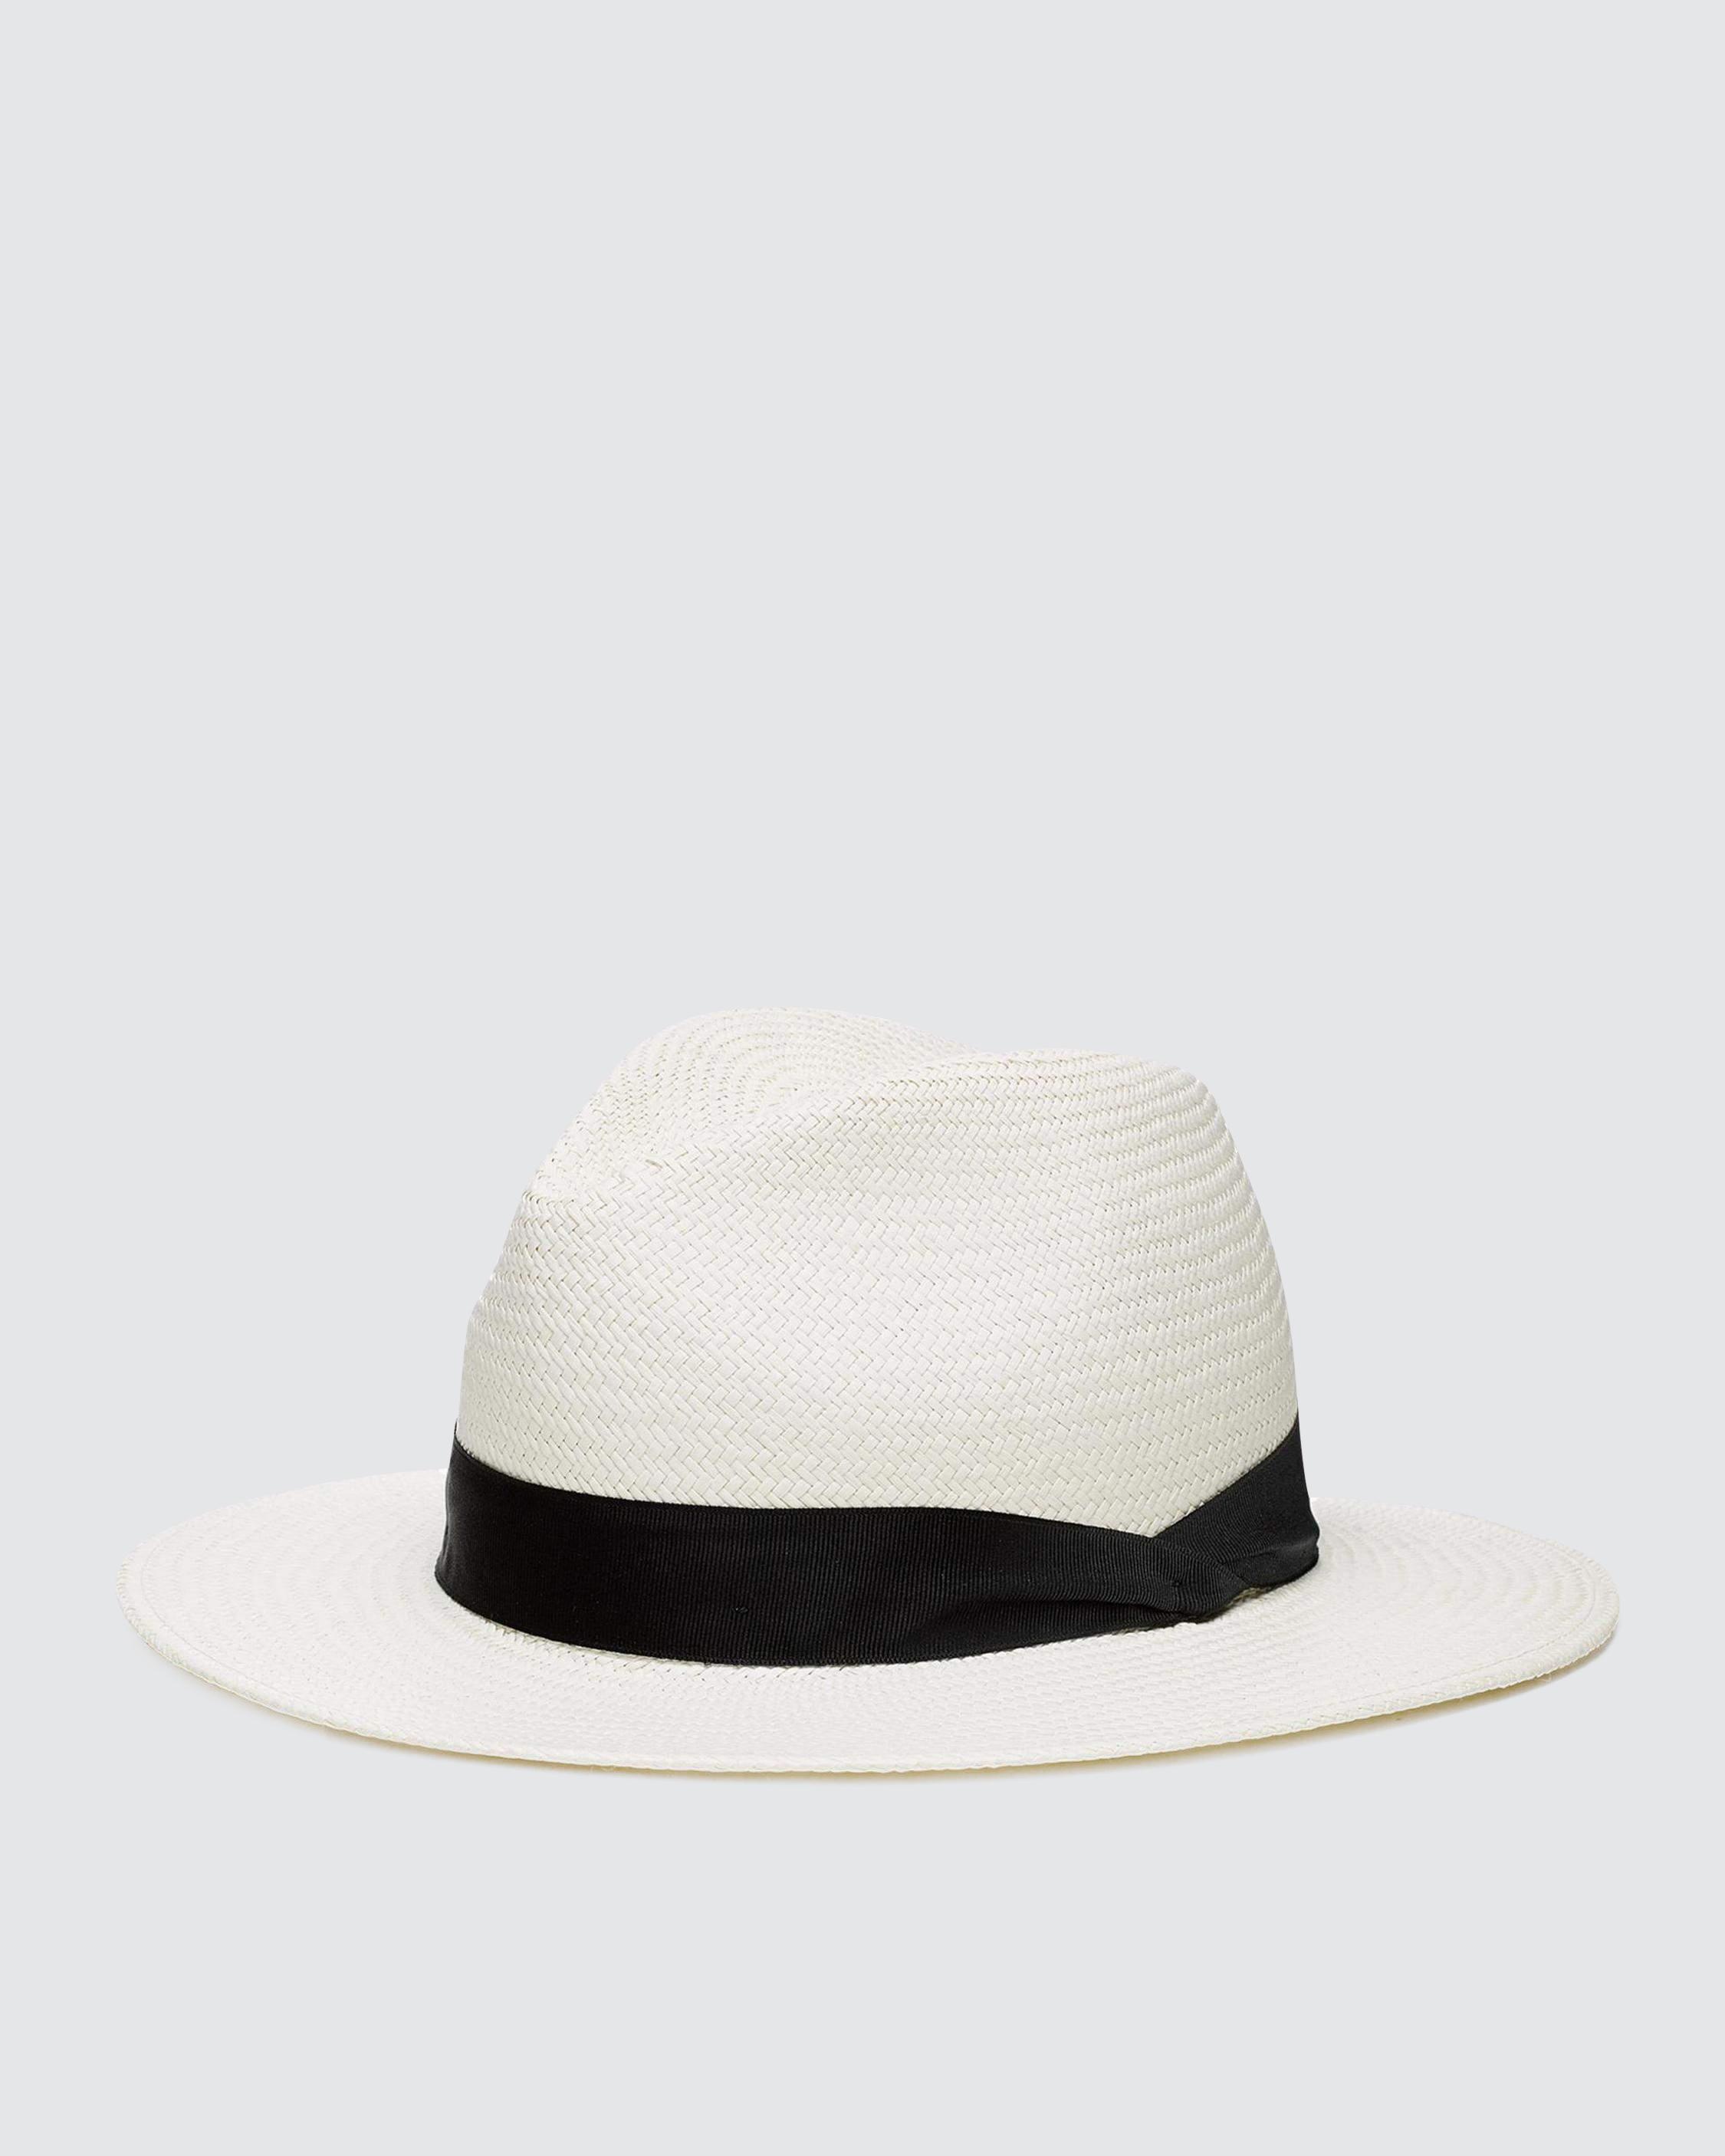 Panama Hat
Straw Hat - 1